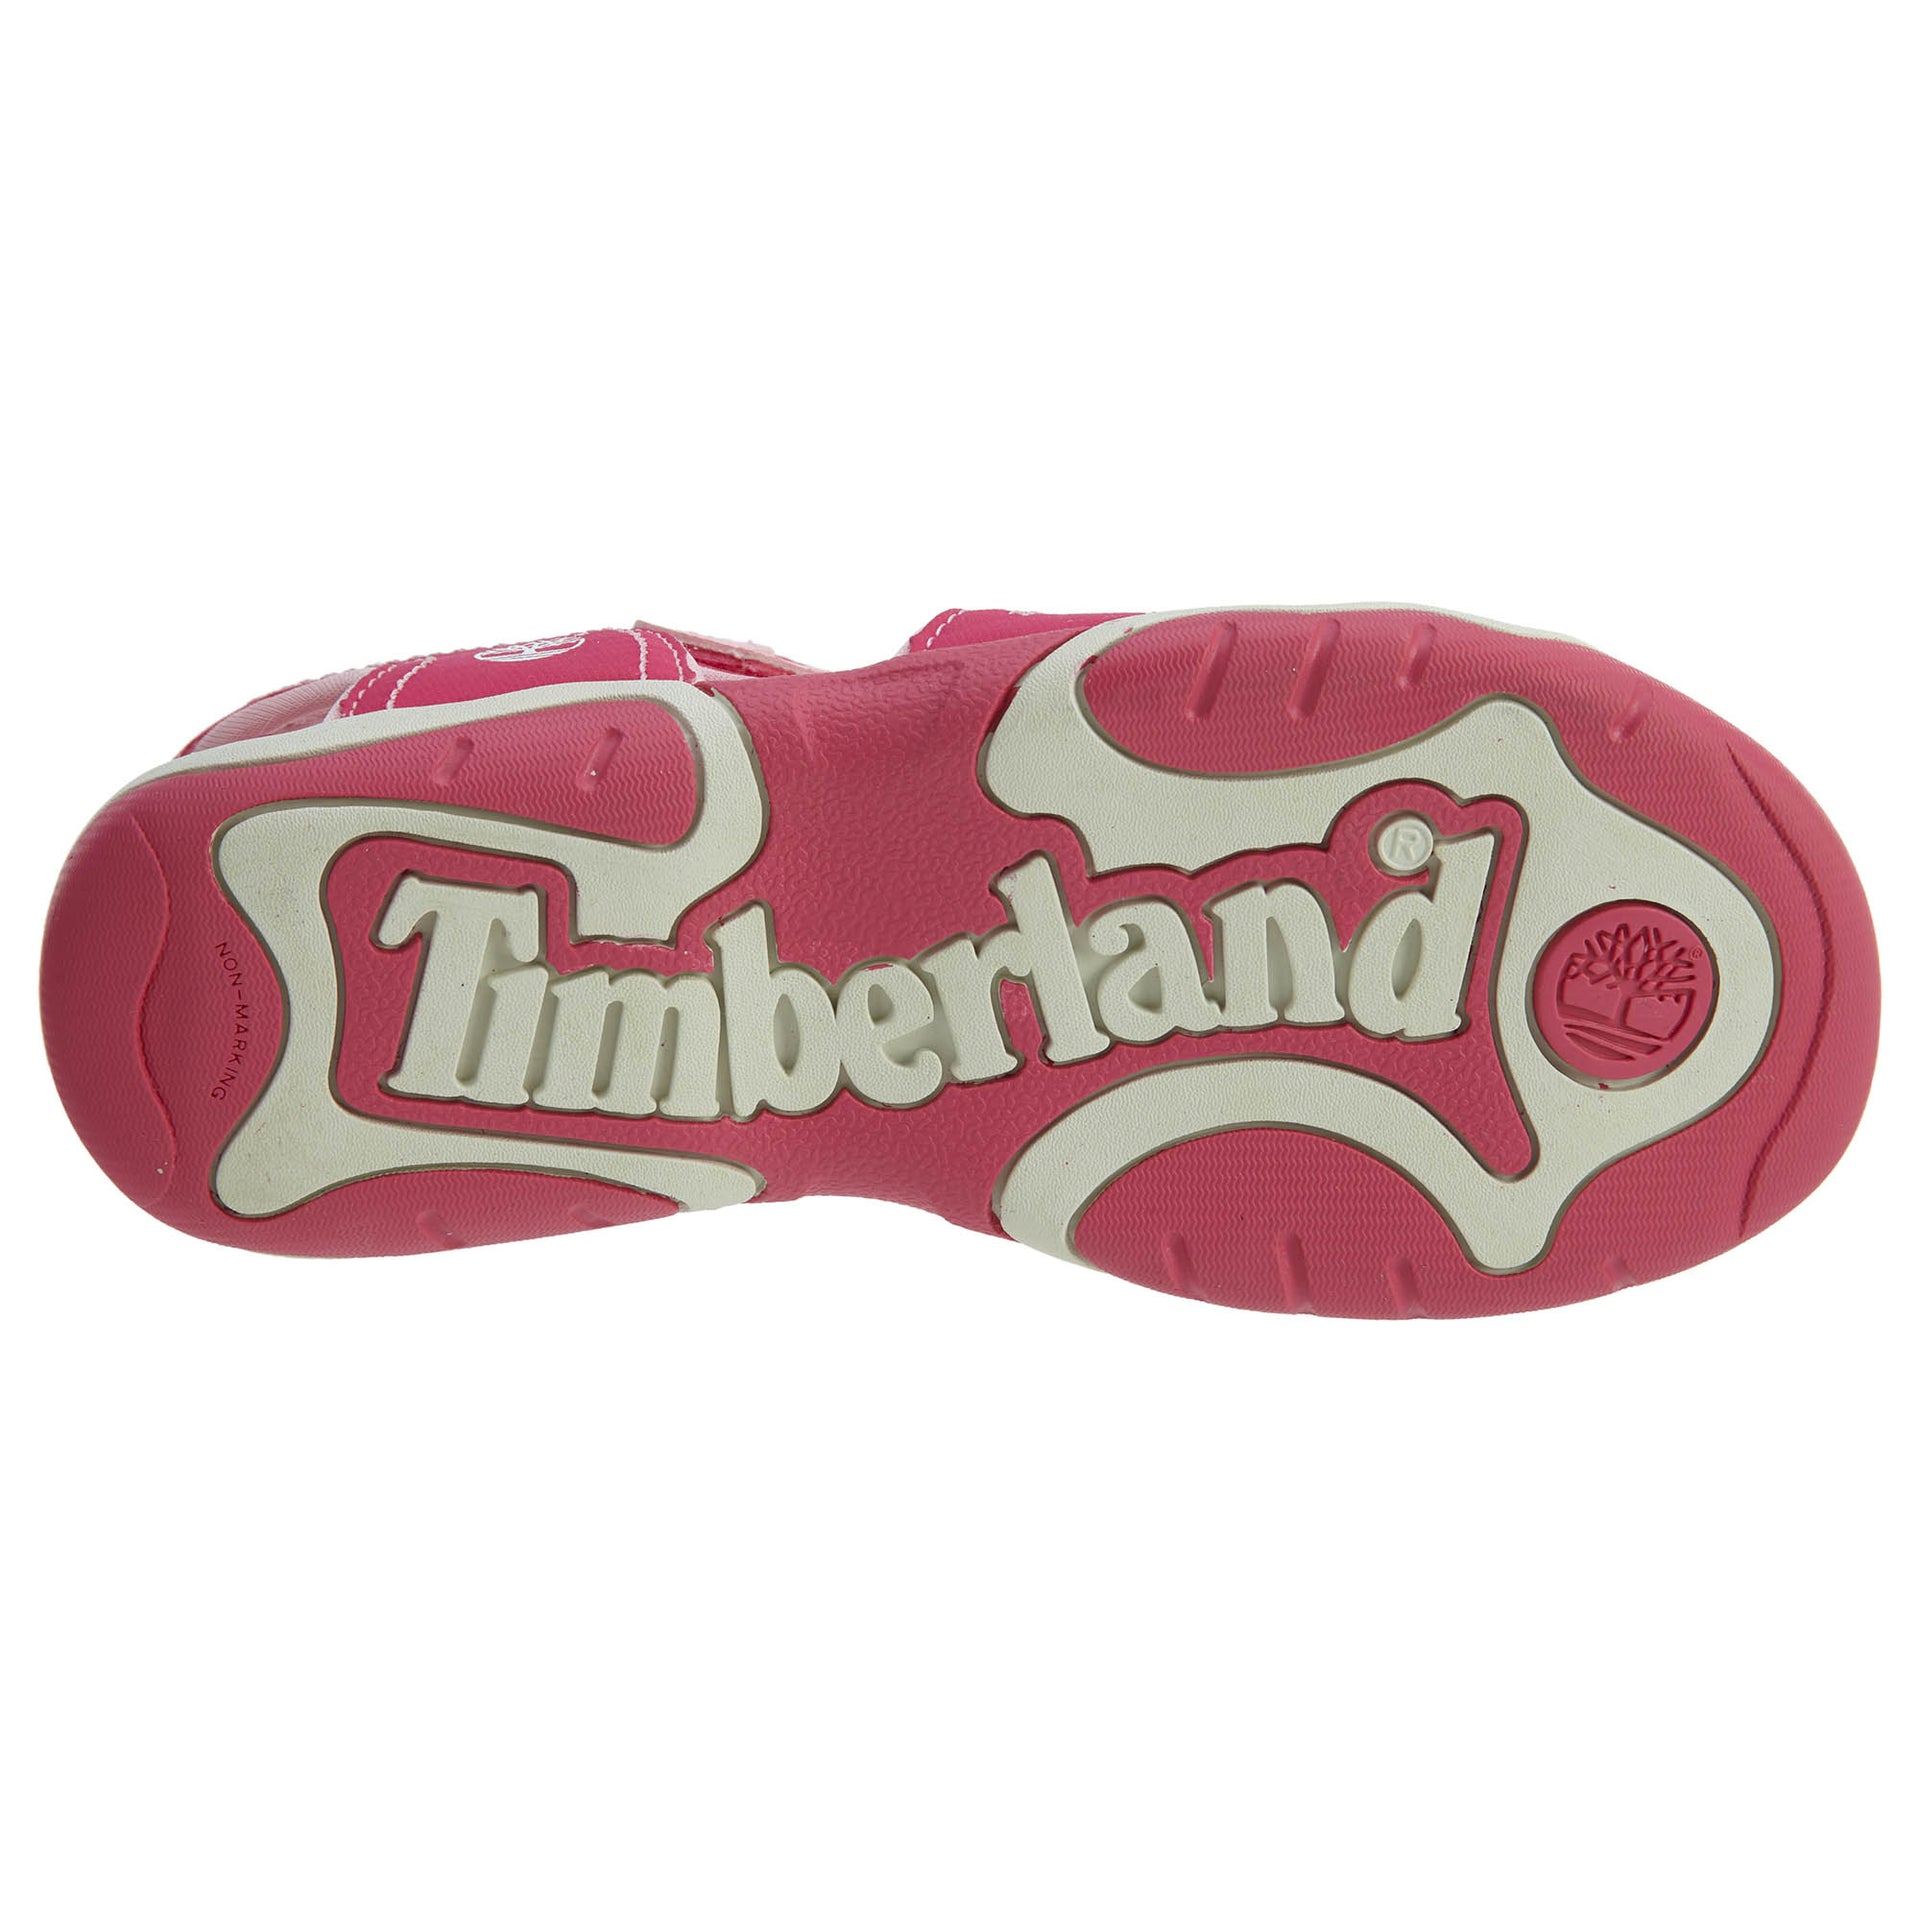 Timberland Adventure Seeker Two Strap Sandal Little Kids Style : Tb02478a